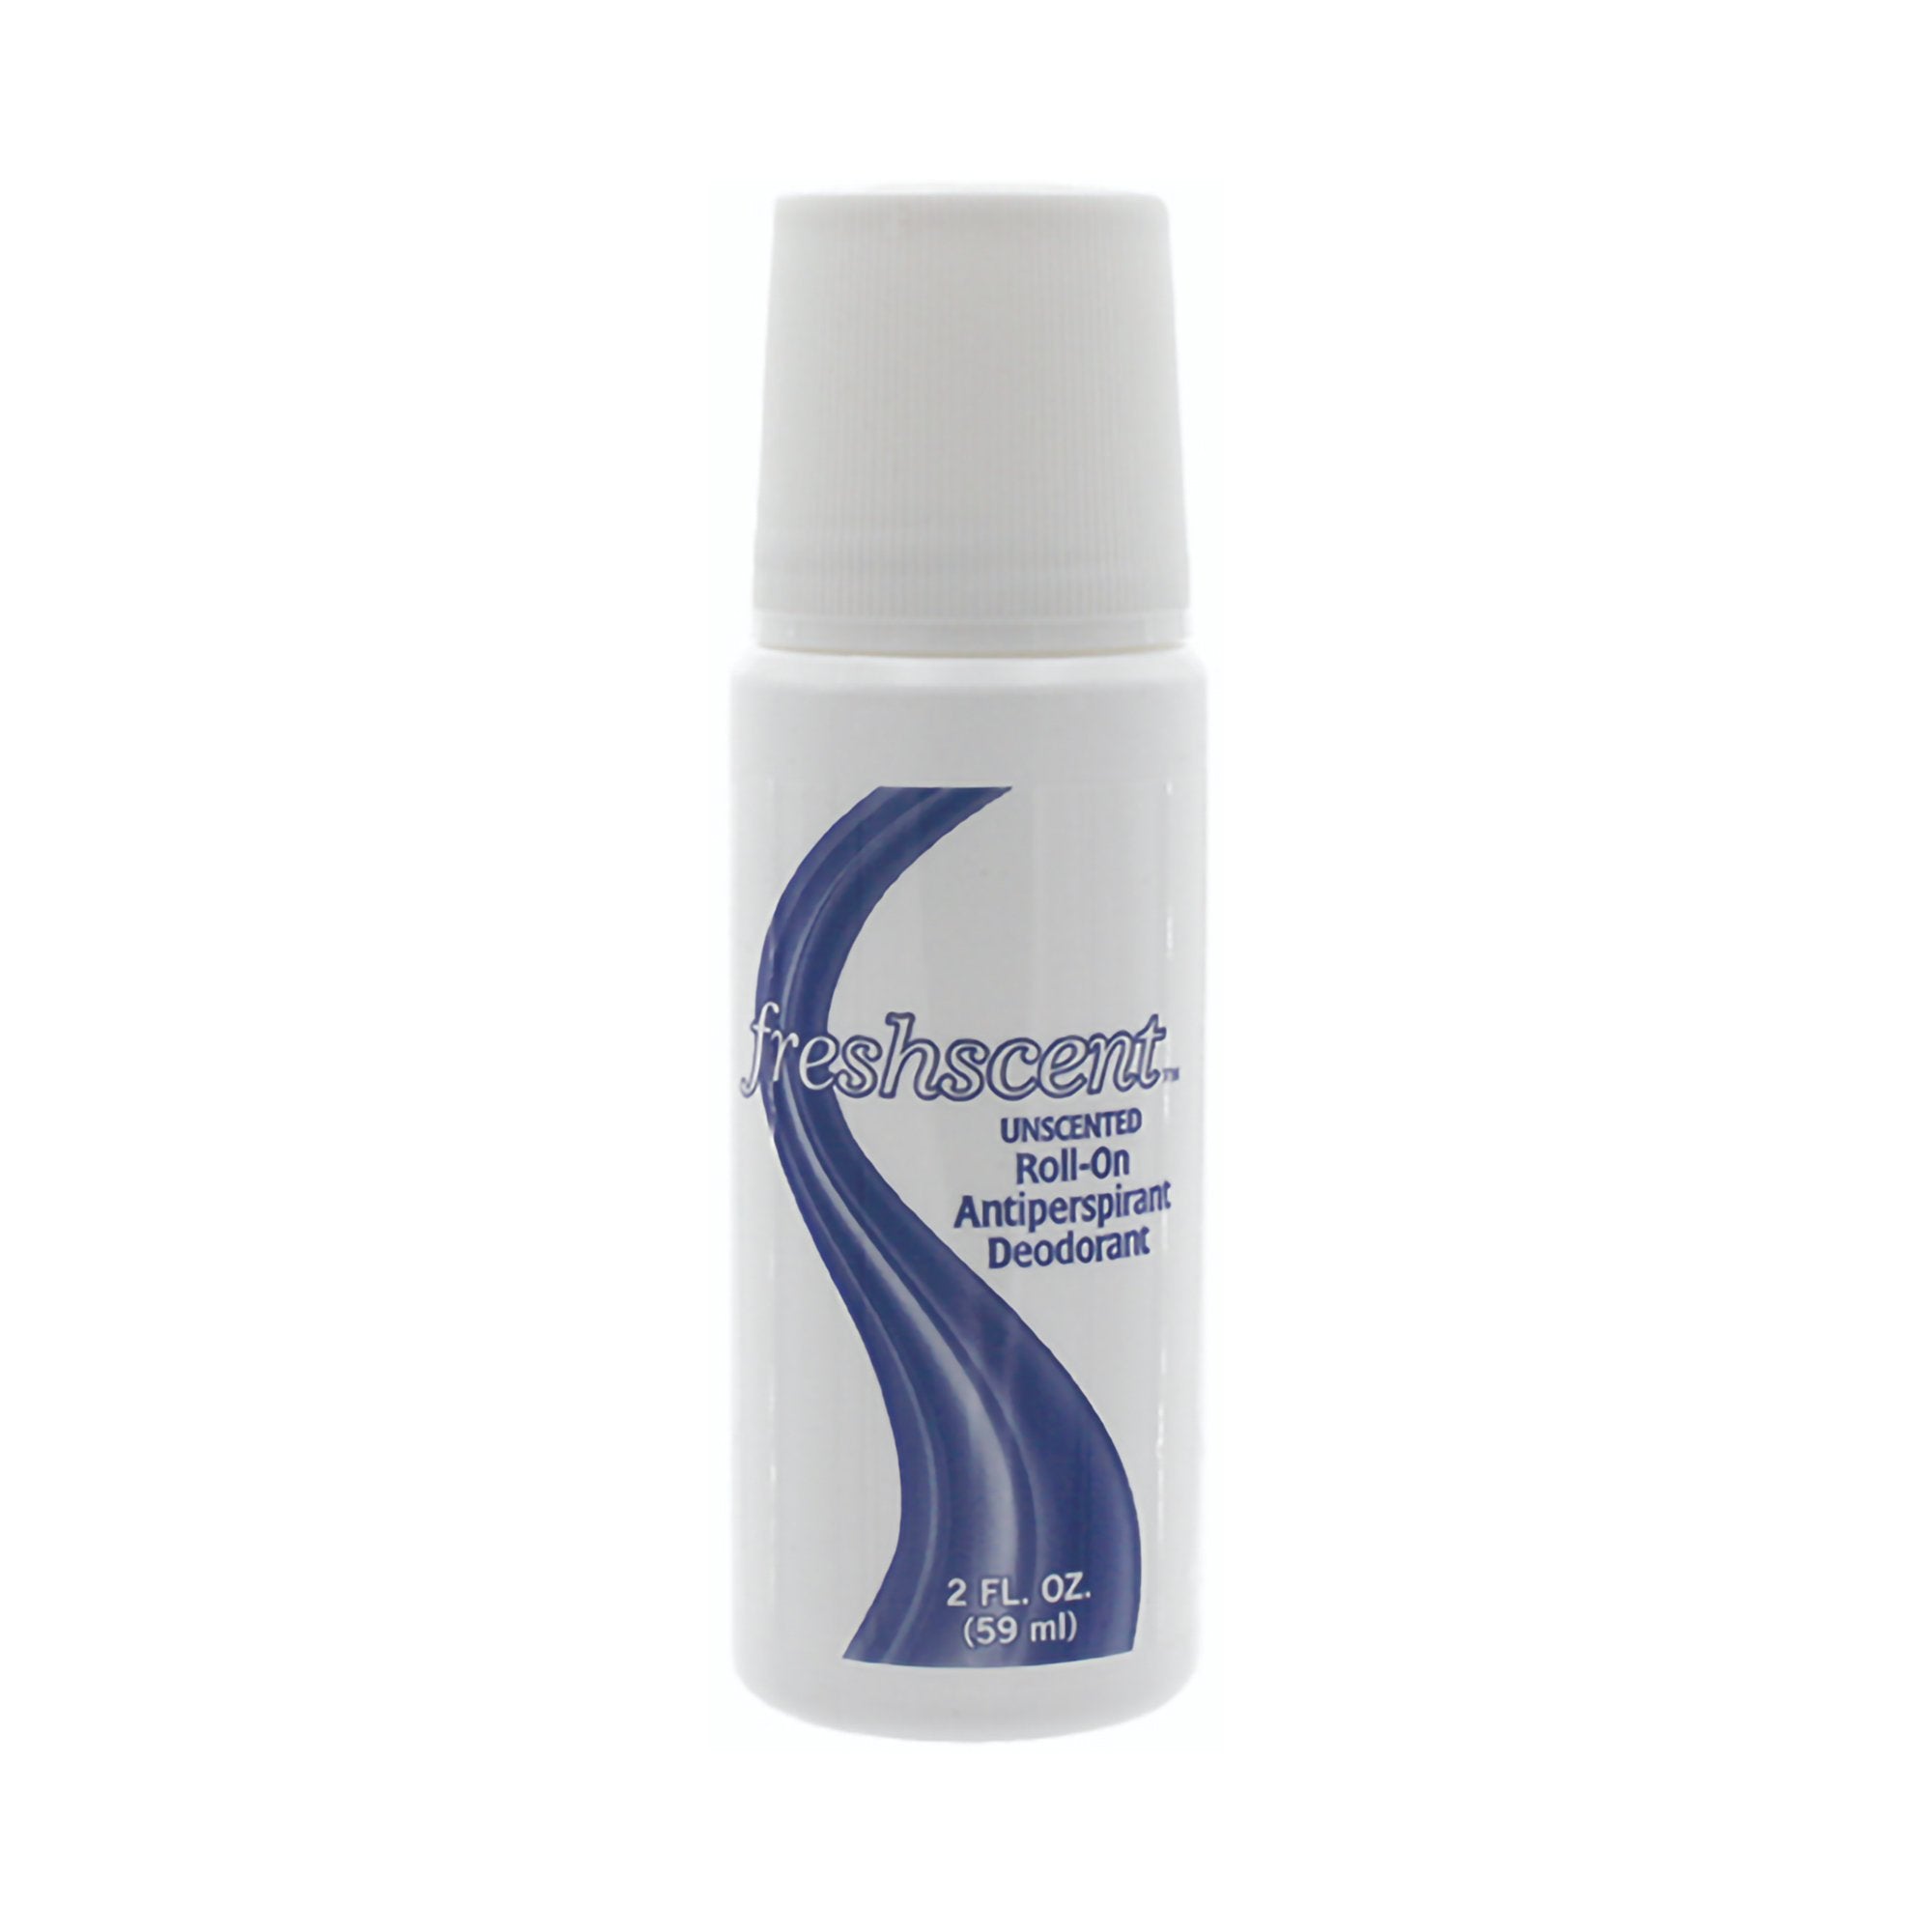 Antiperspirant / Deodorant Freshscent™ Roll-On 2 oz. Unscented